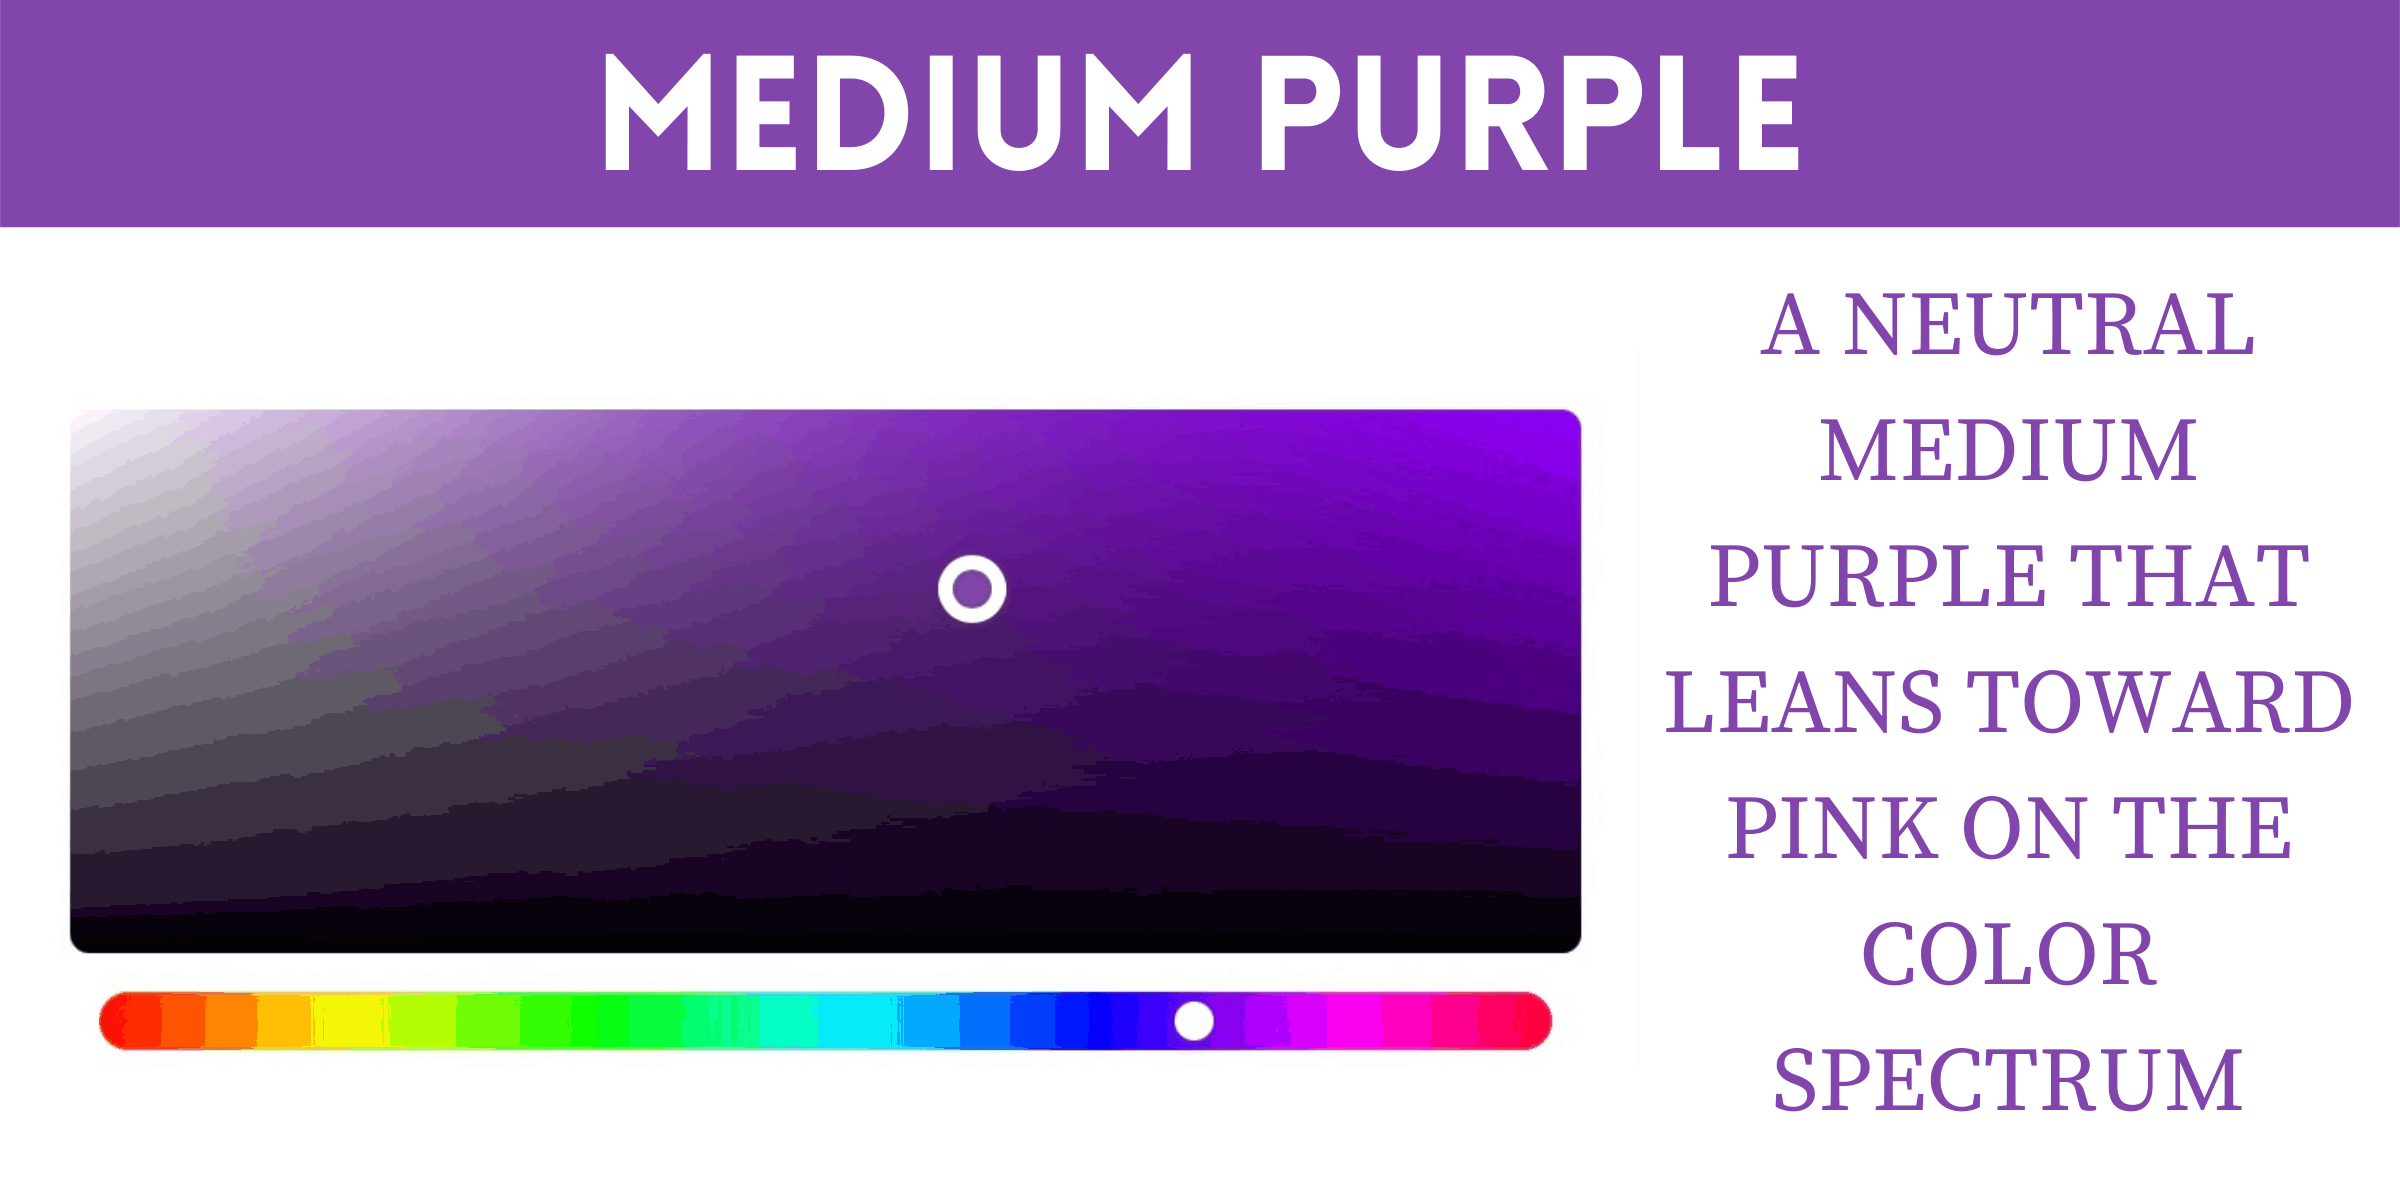 Medium purple is a universally flattering color.